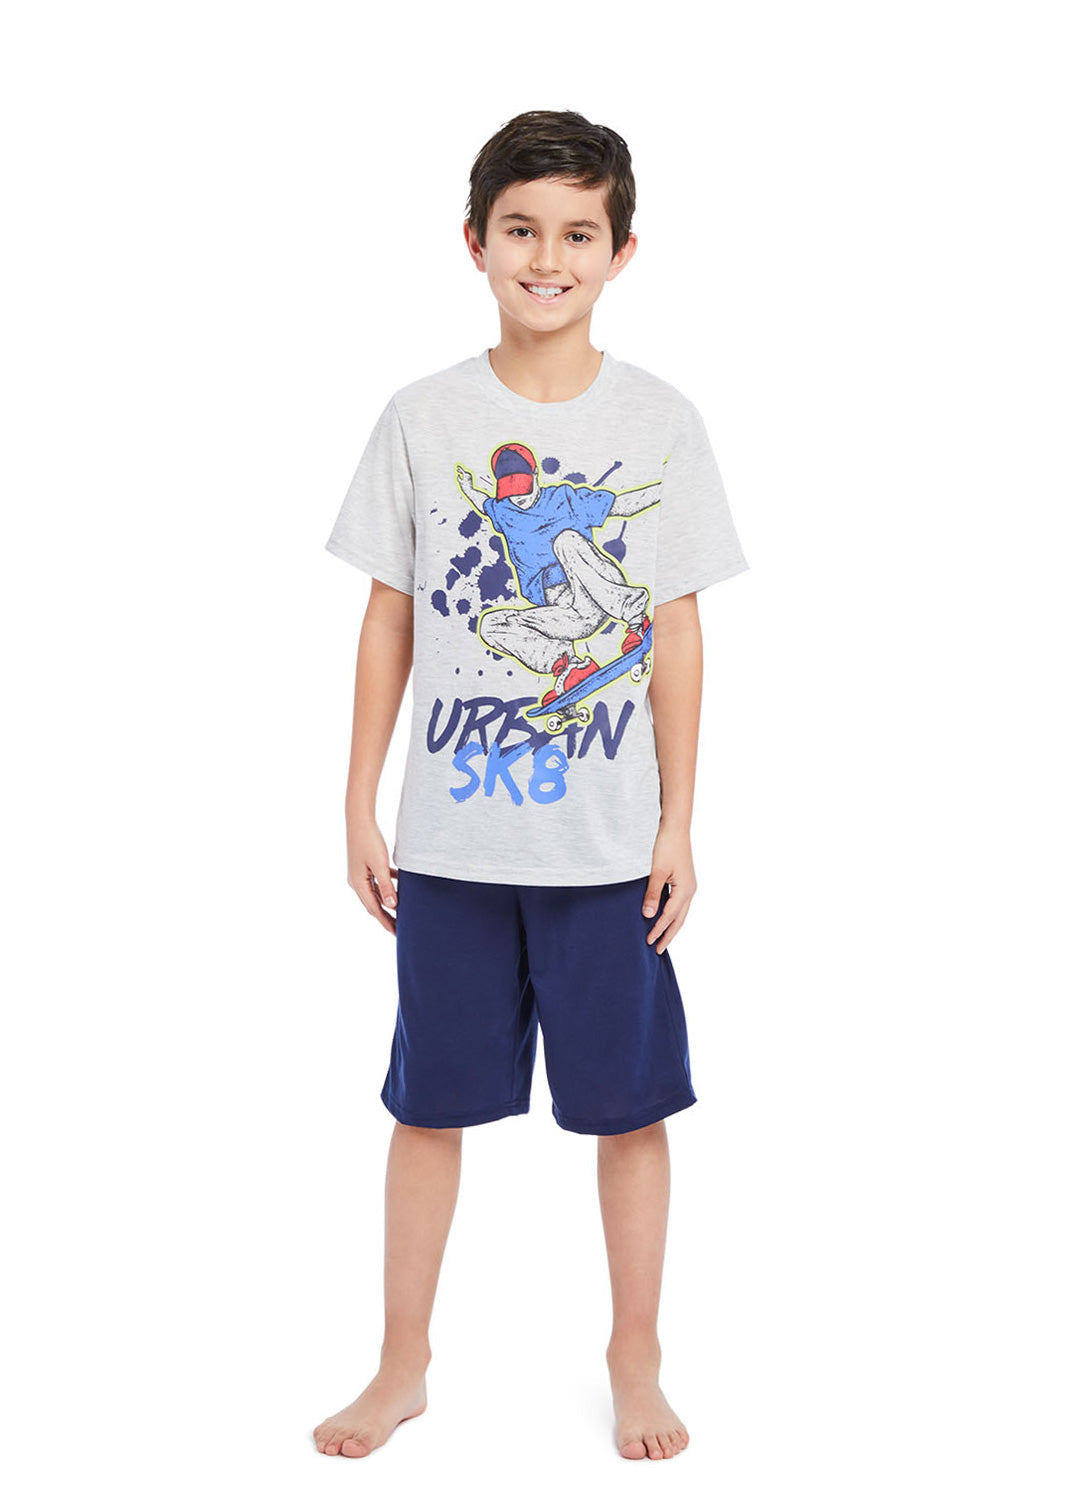 Boy wearing Pj set Skater, t-shirt (gray) with print and shorts (navy)